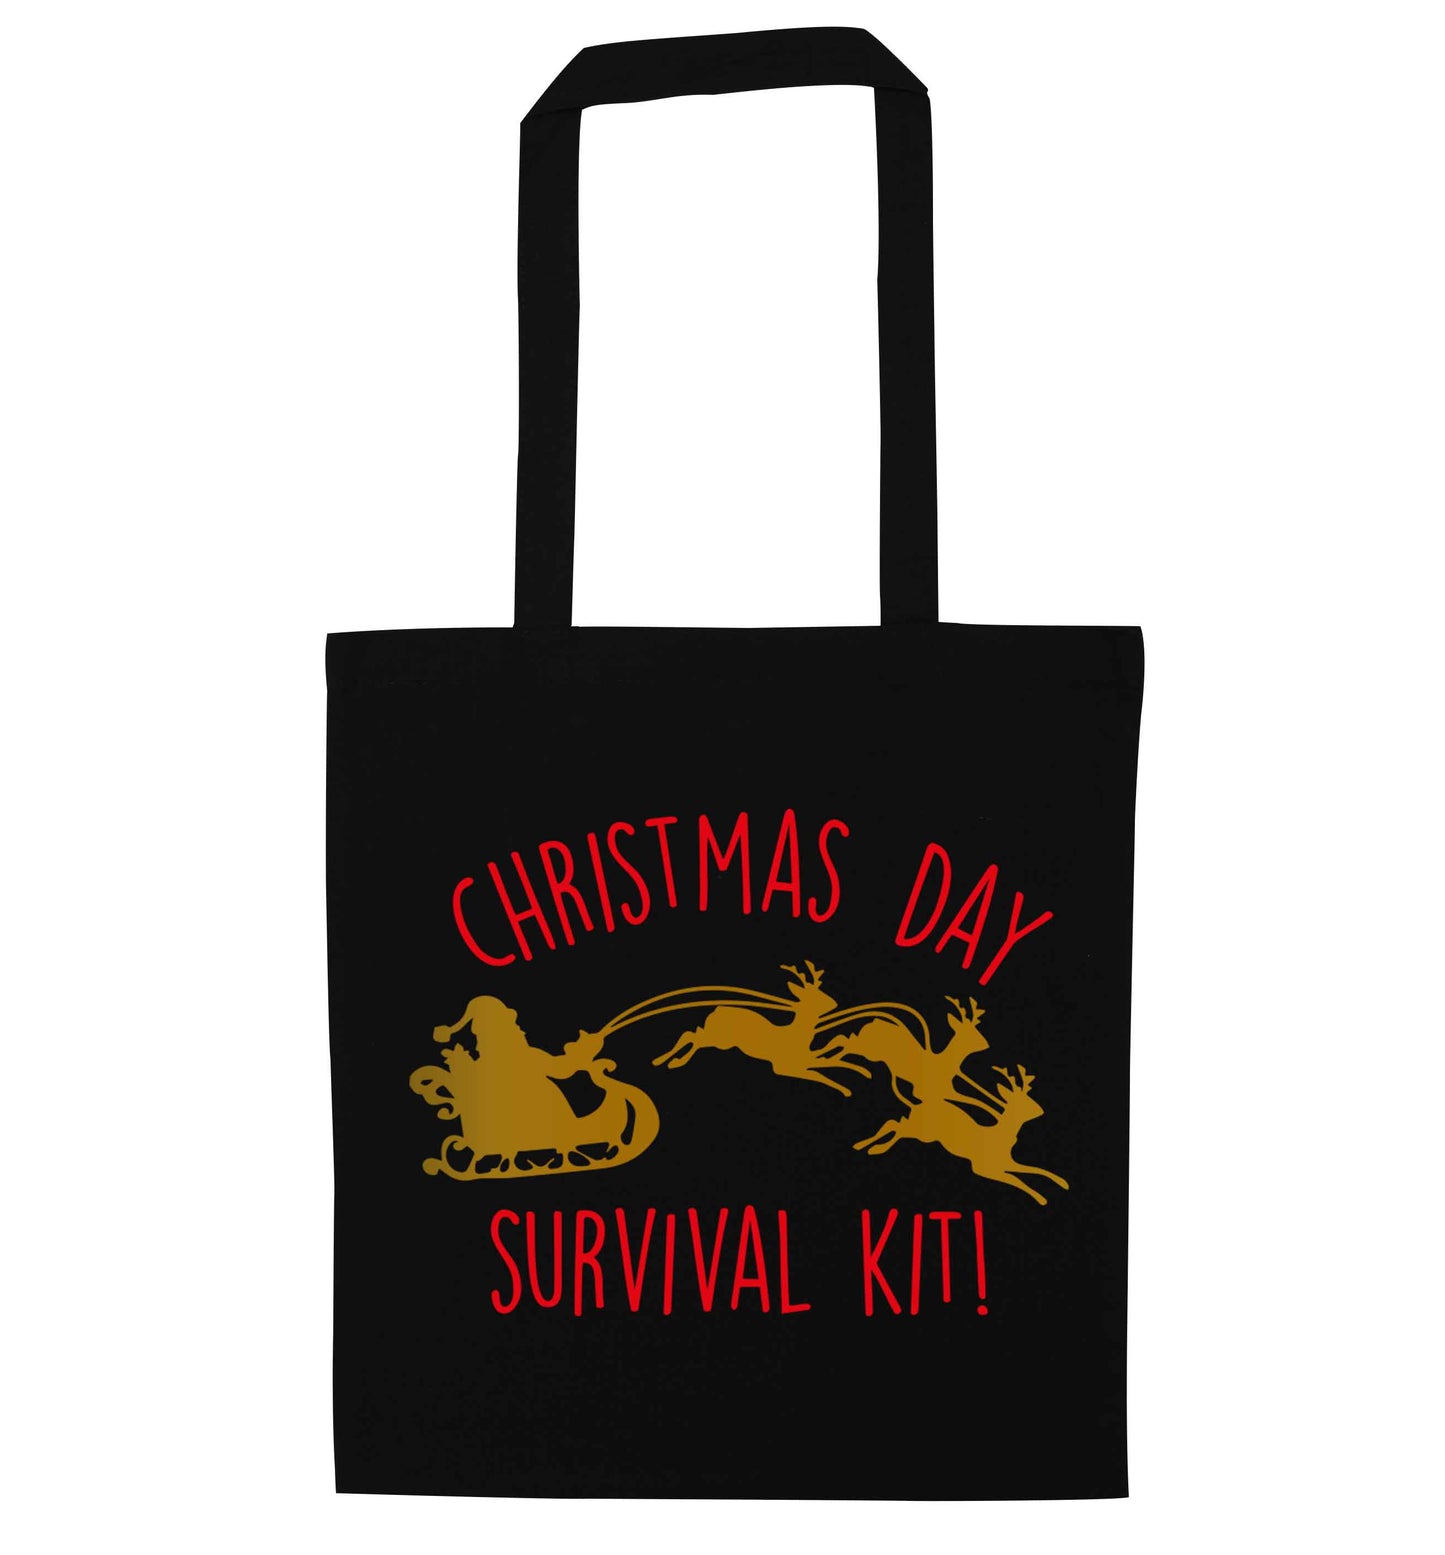 Christmas Day Survival Kitblack tote bag